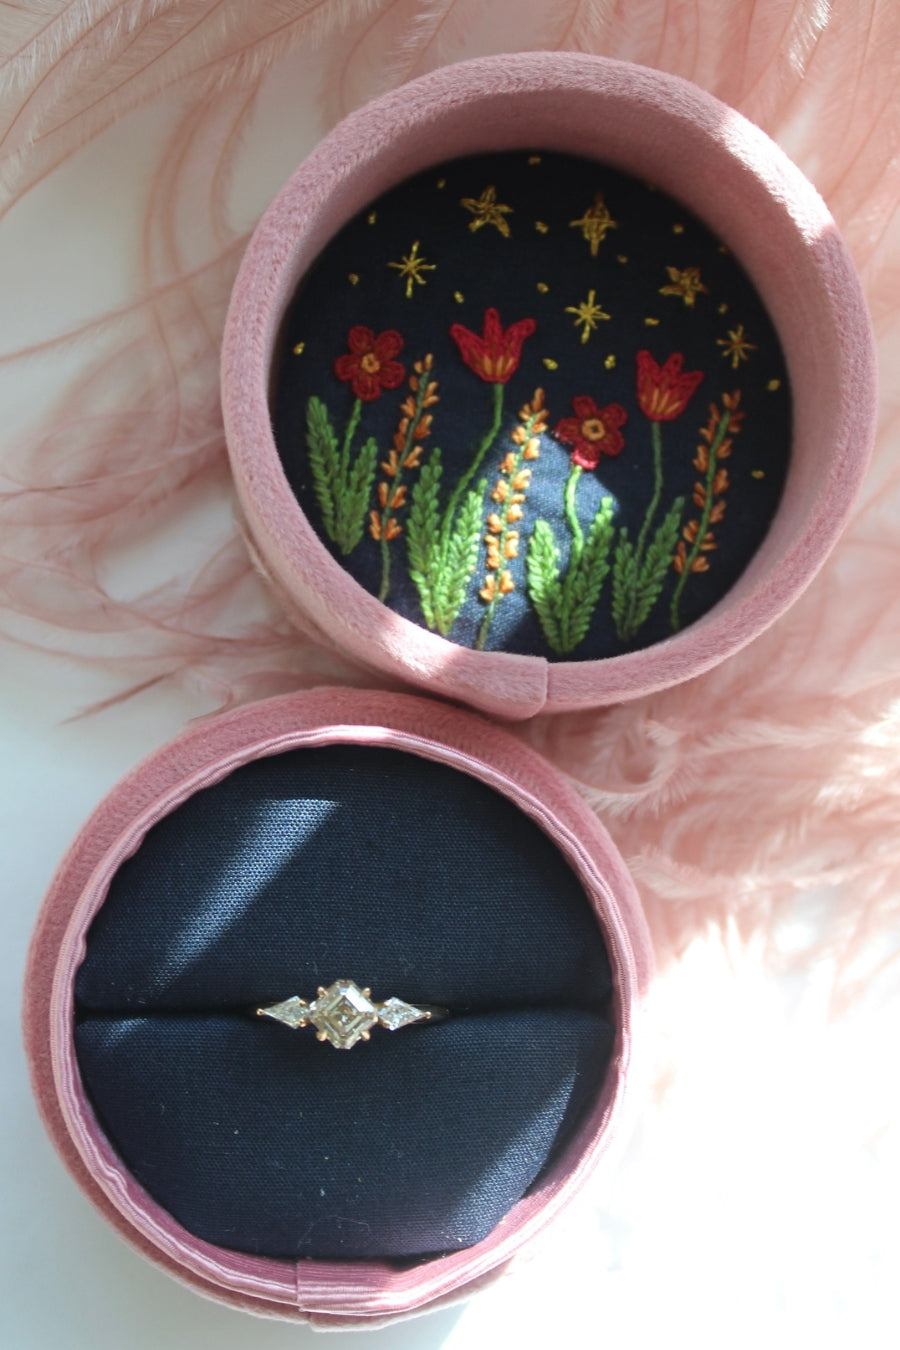 
            Catherine Champagne Asscher Cut Diamond Ring